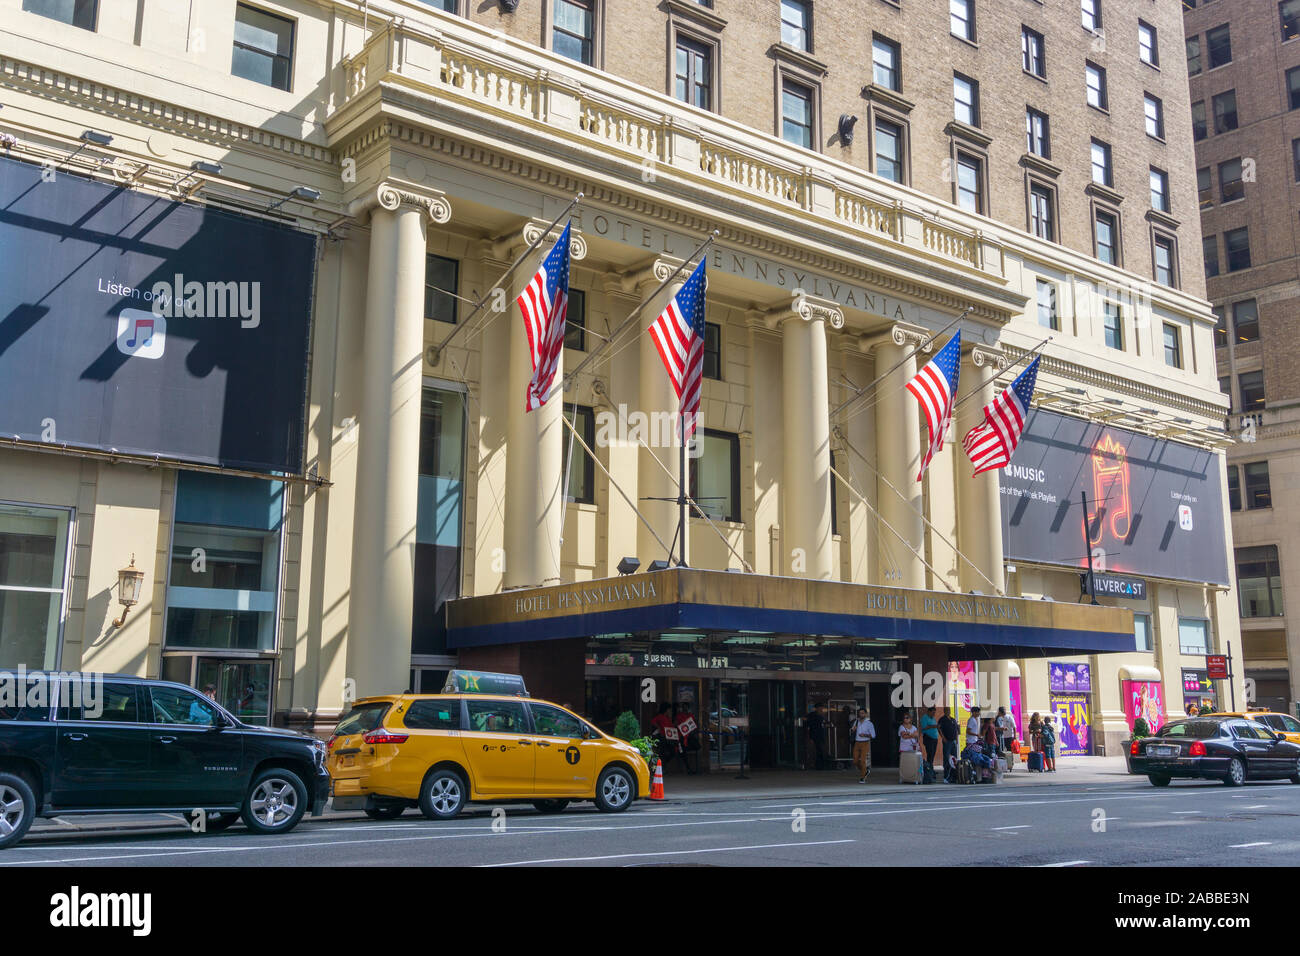 New York, USA - 20. August 2018: Das Hotel Pennsylvania Hotel 401 Seventh Avenue in Manhattan, New York City entfernt. Stockfoto